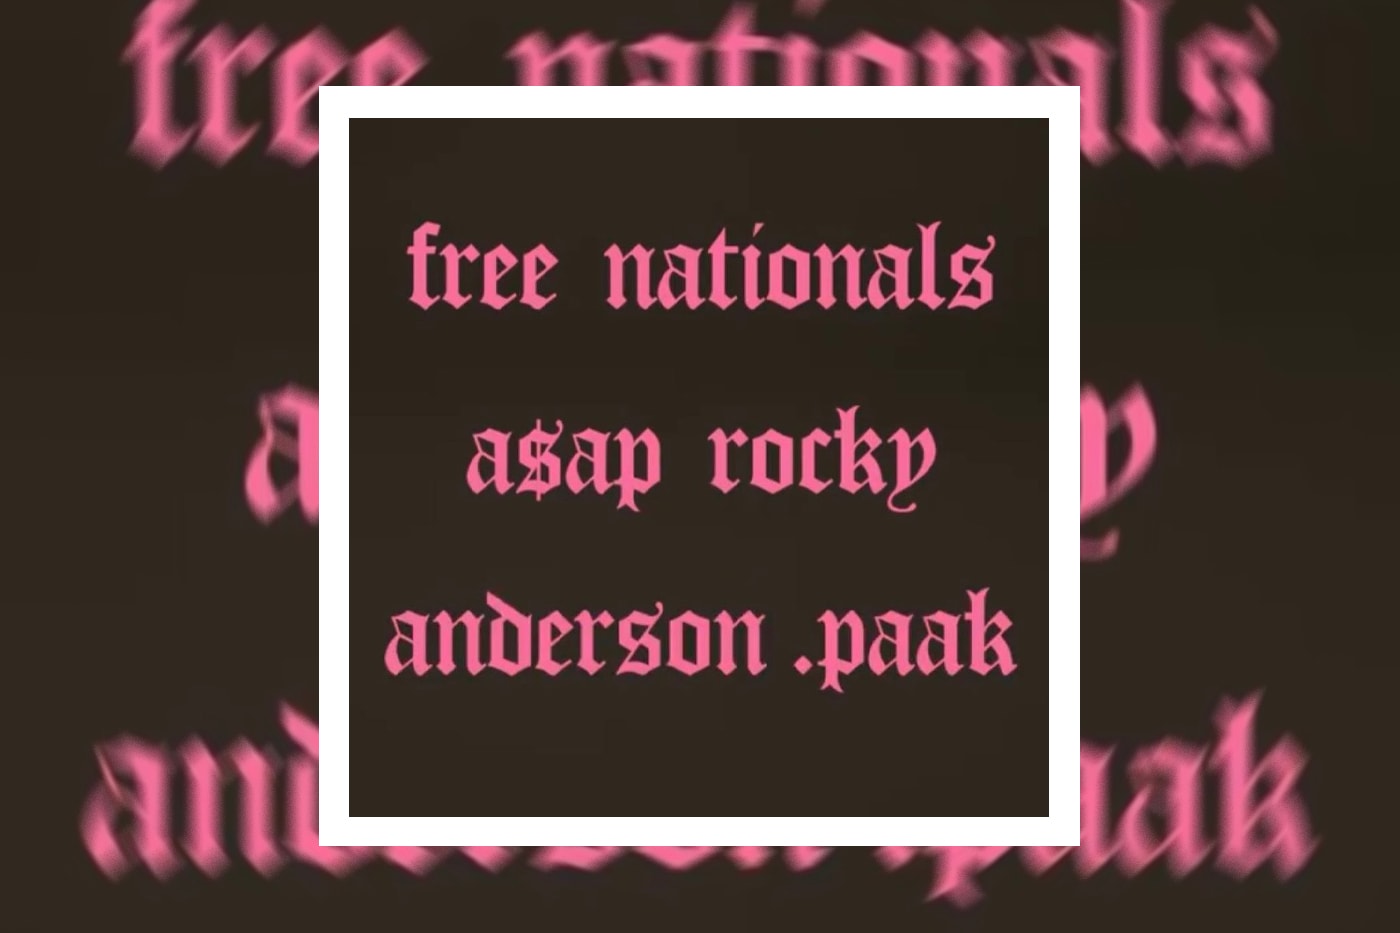 Free Nationals AsAP Rocky Anderson .Paak GANGsTA Single Stream